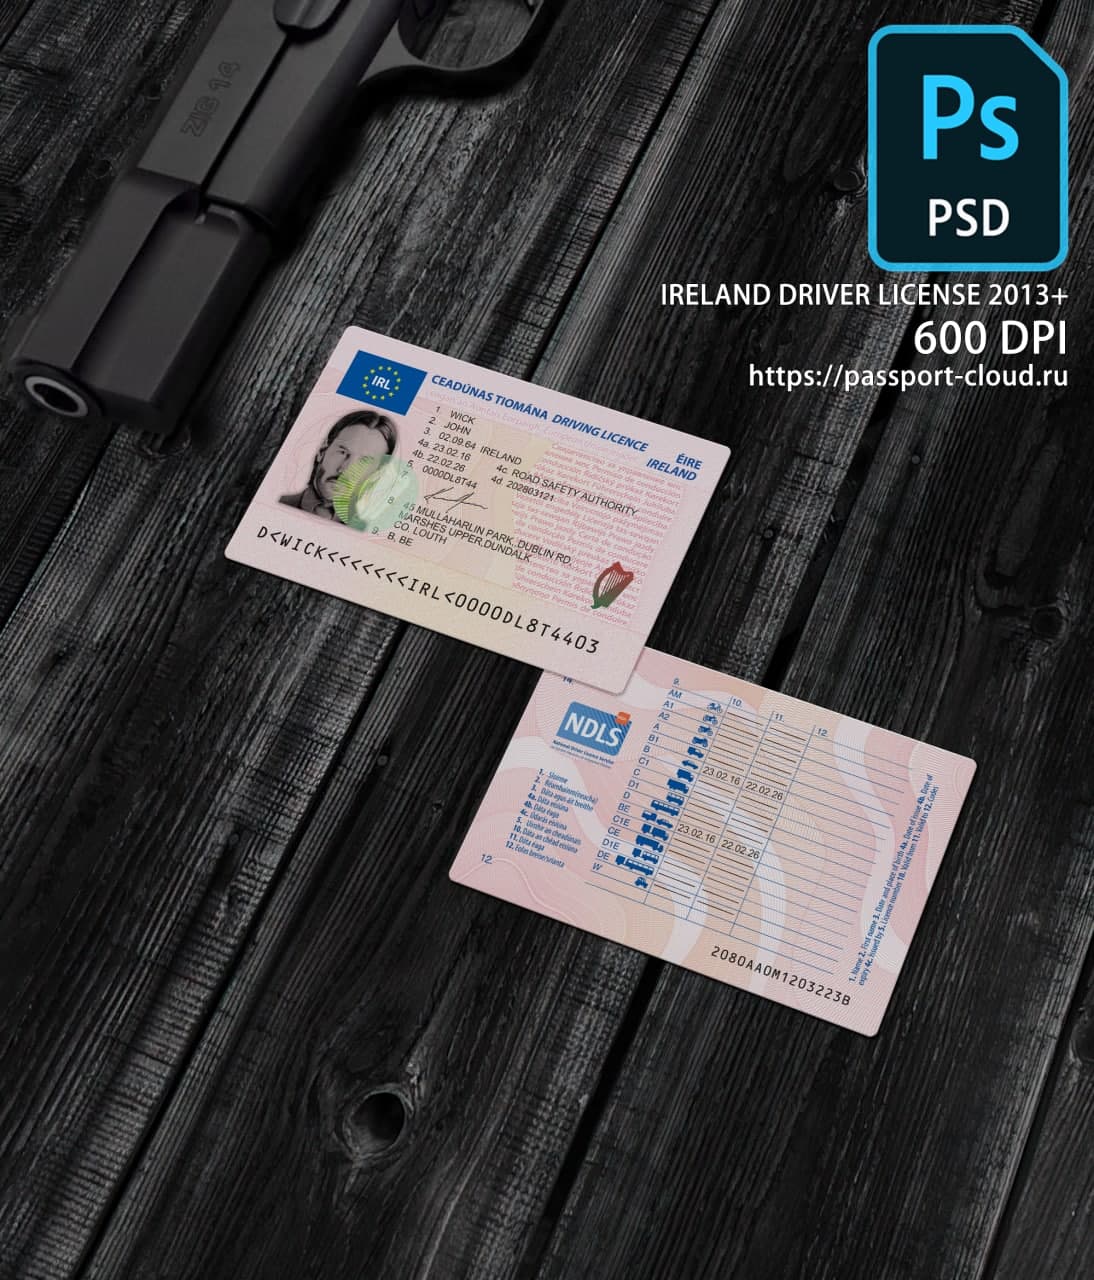 Ireland Driver License 2013+1